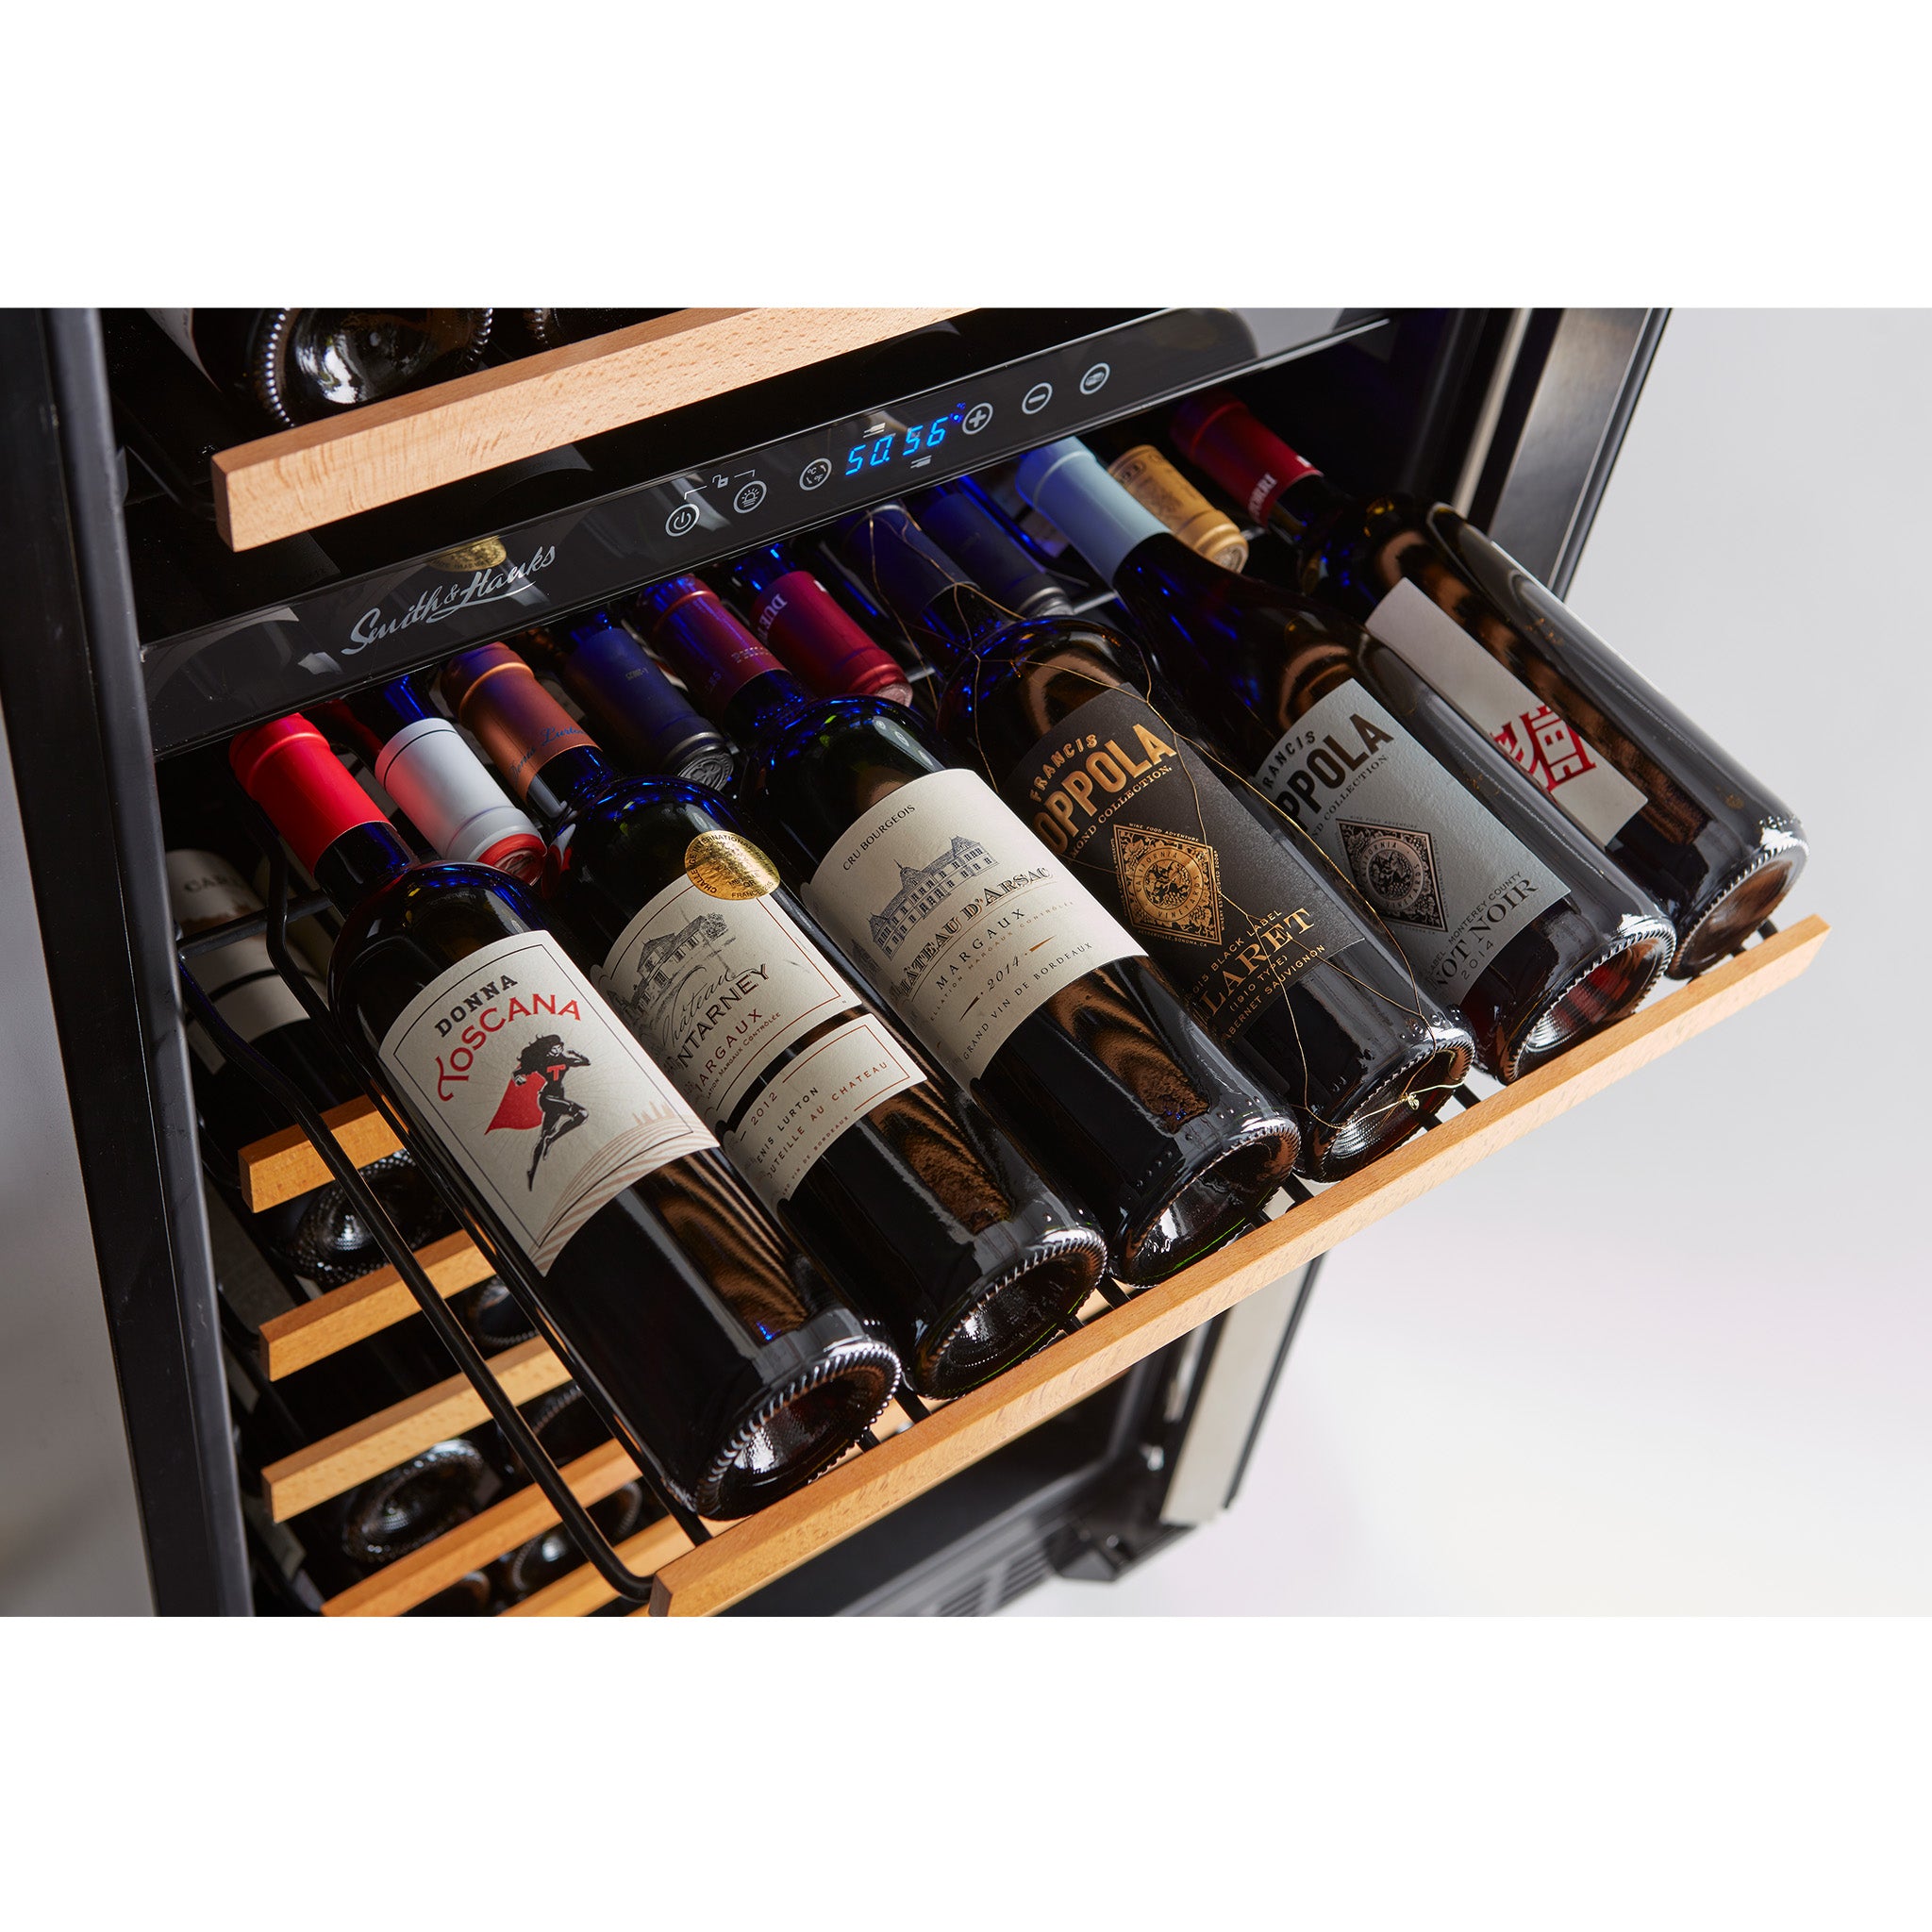 Smith & Hanks - 24" 166 Bottle Premium Dual Zone Wine Cooler with Seamless Stainless Steel Trim Door (RE100041)